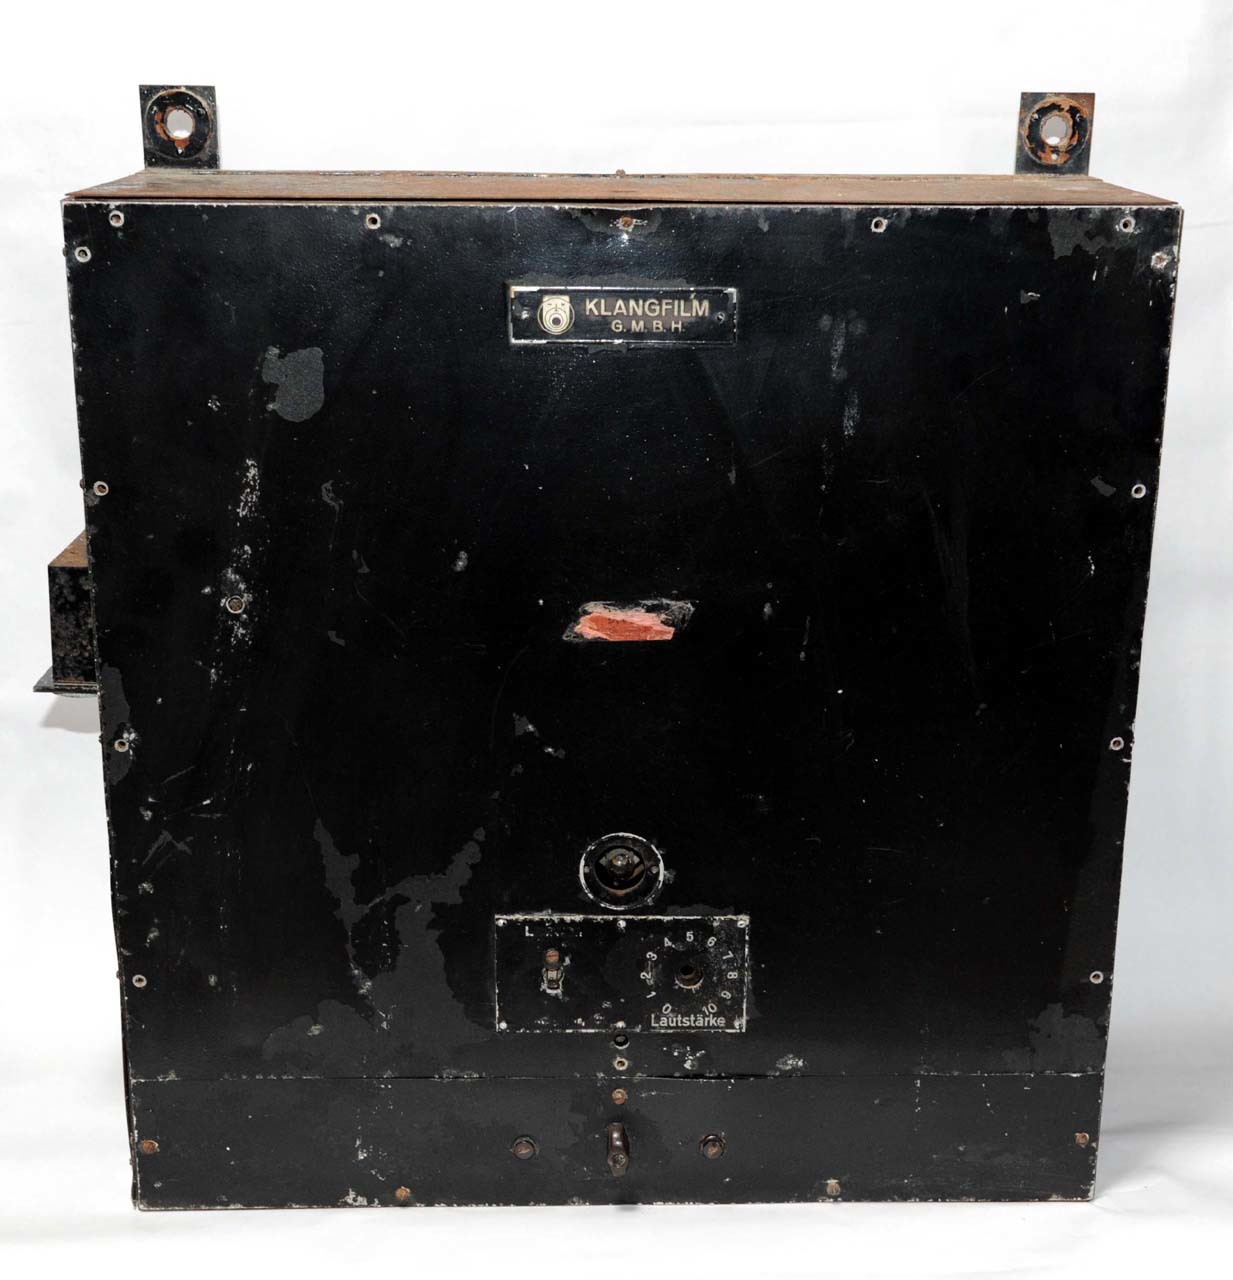 Zetton amplifier (type 32603, 1932)